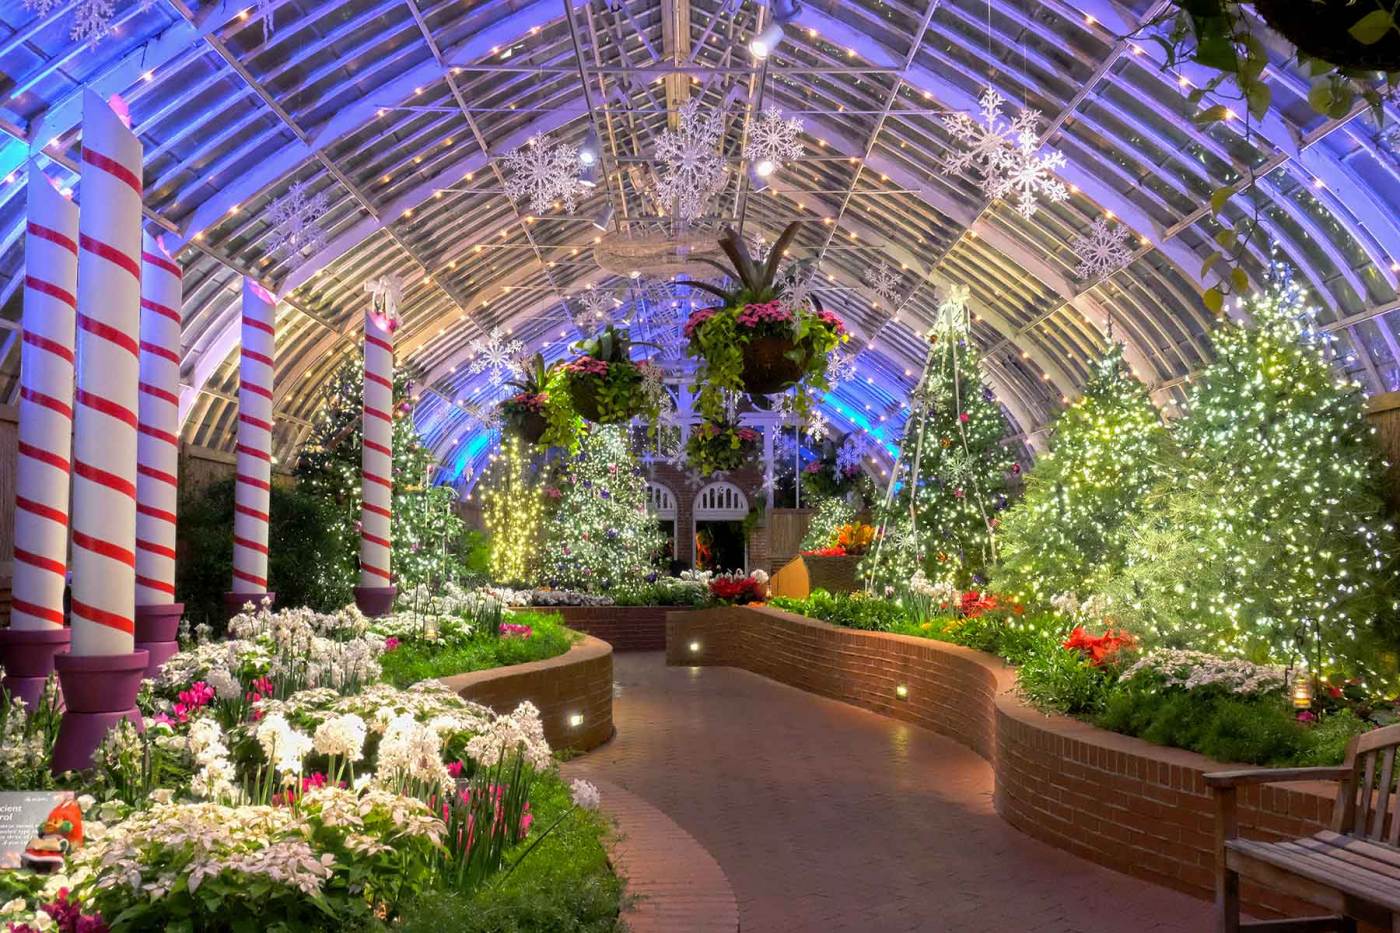 Phipps Conservatory Winter Flower Show and Light Garden